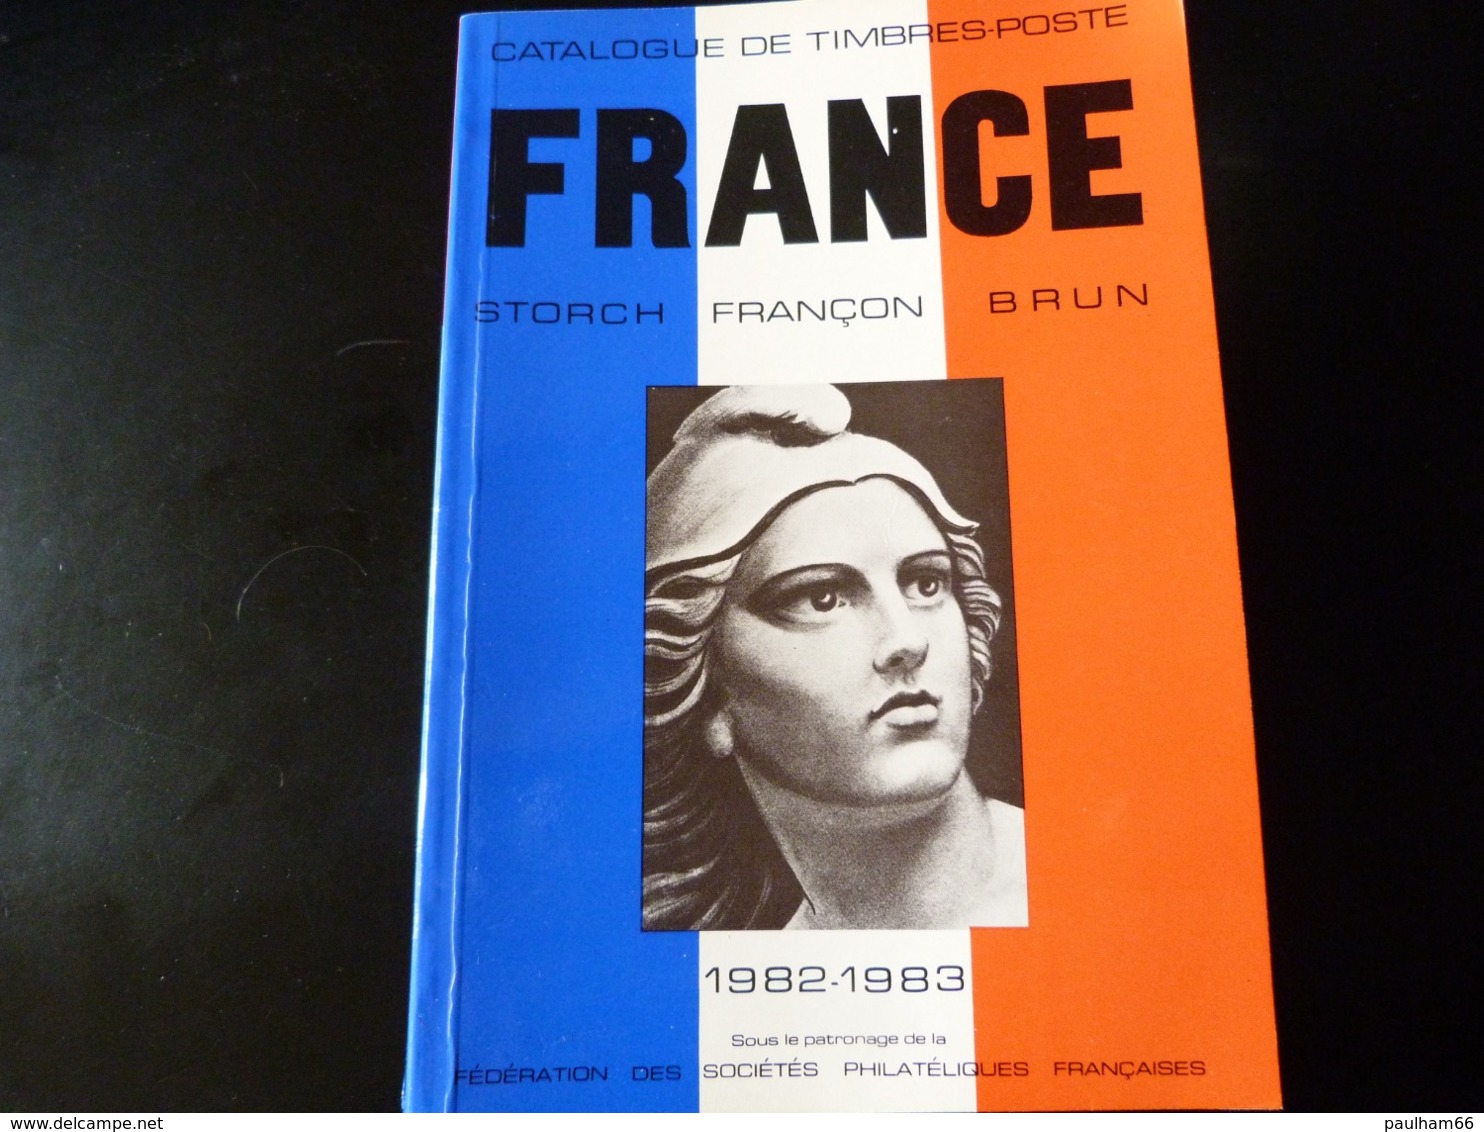 CATALOGUE  TIMBRES DE FRANCE  - STORCH - FRANCON - BRUN   1982 - 1983 - Handbooks